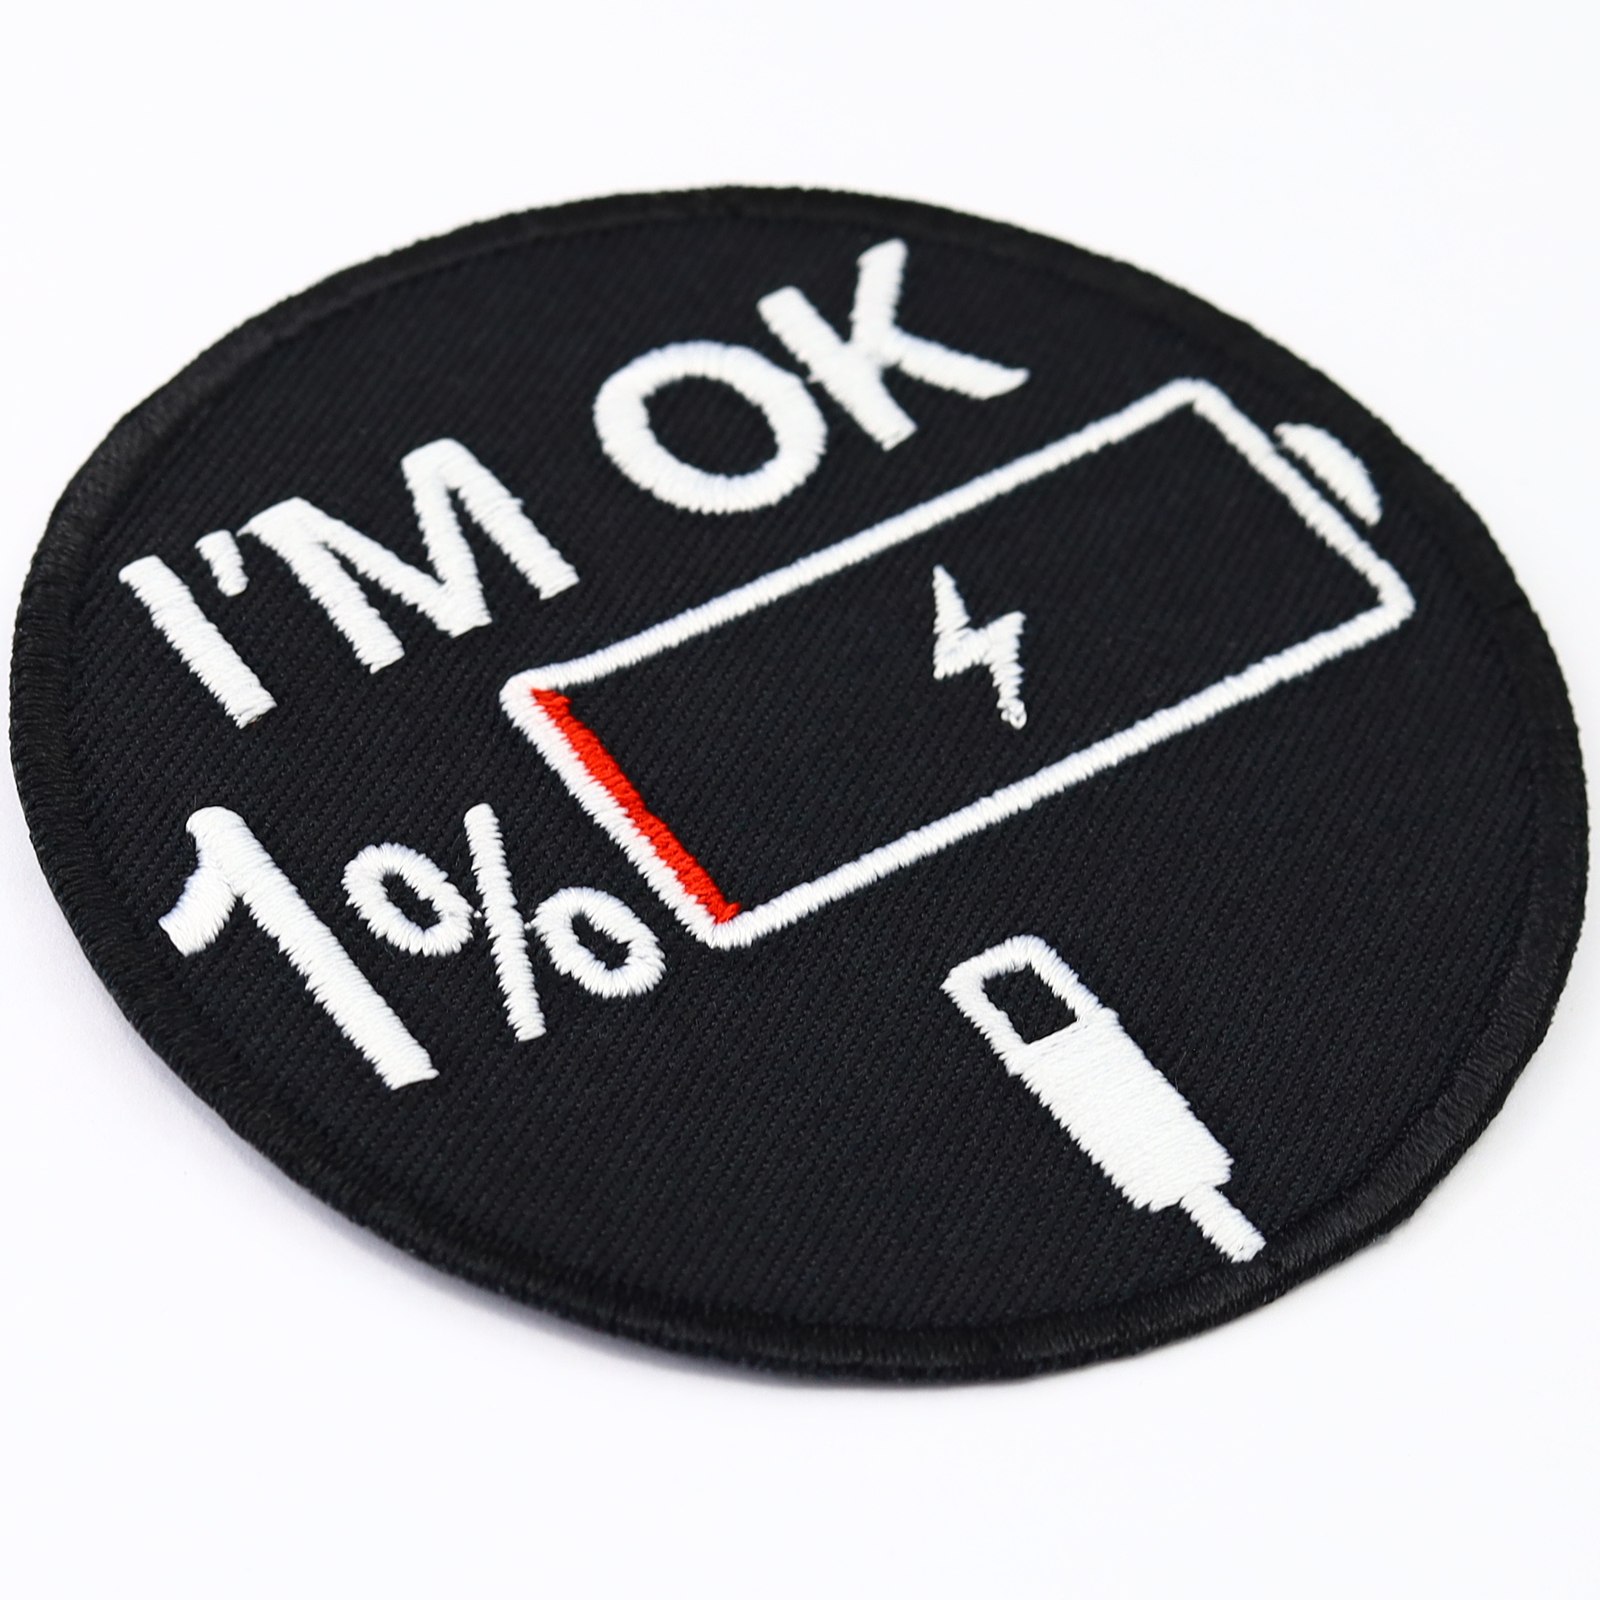 I'm OK 1% Left - Patch